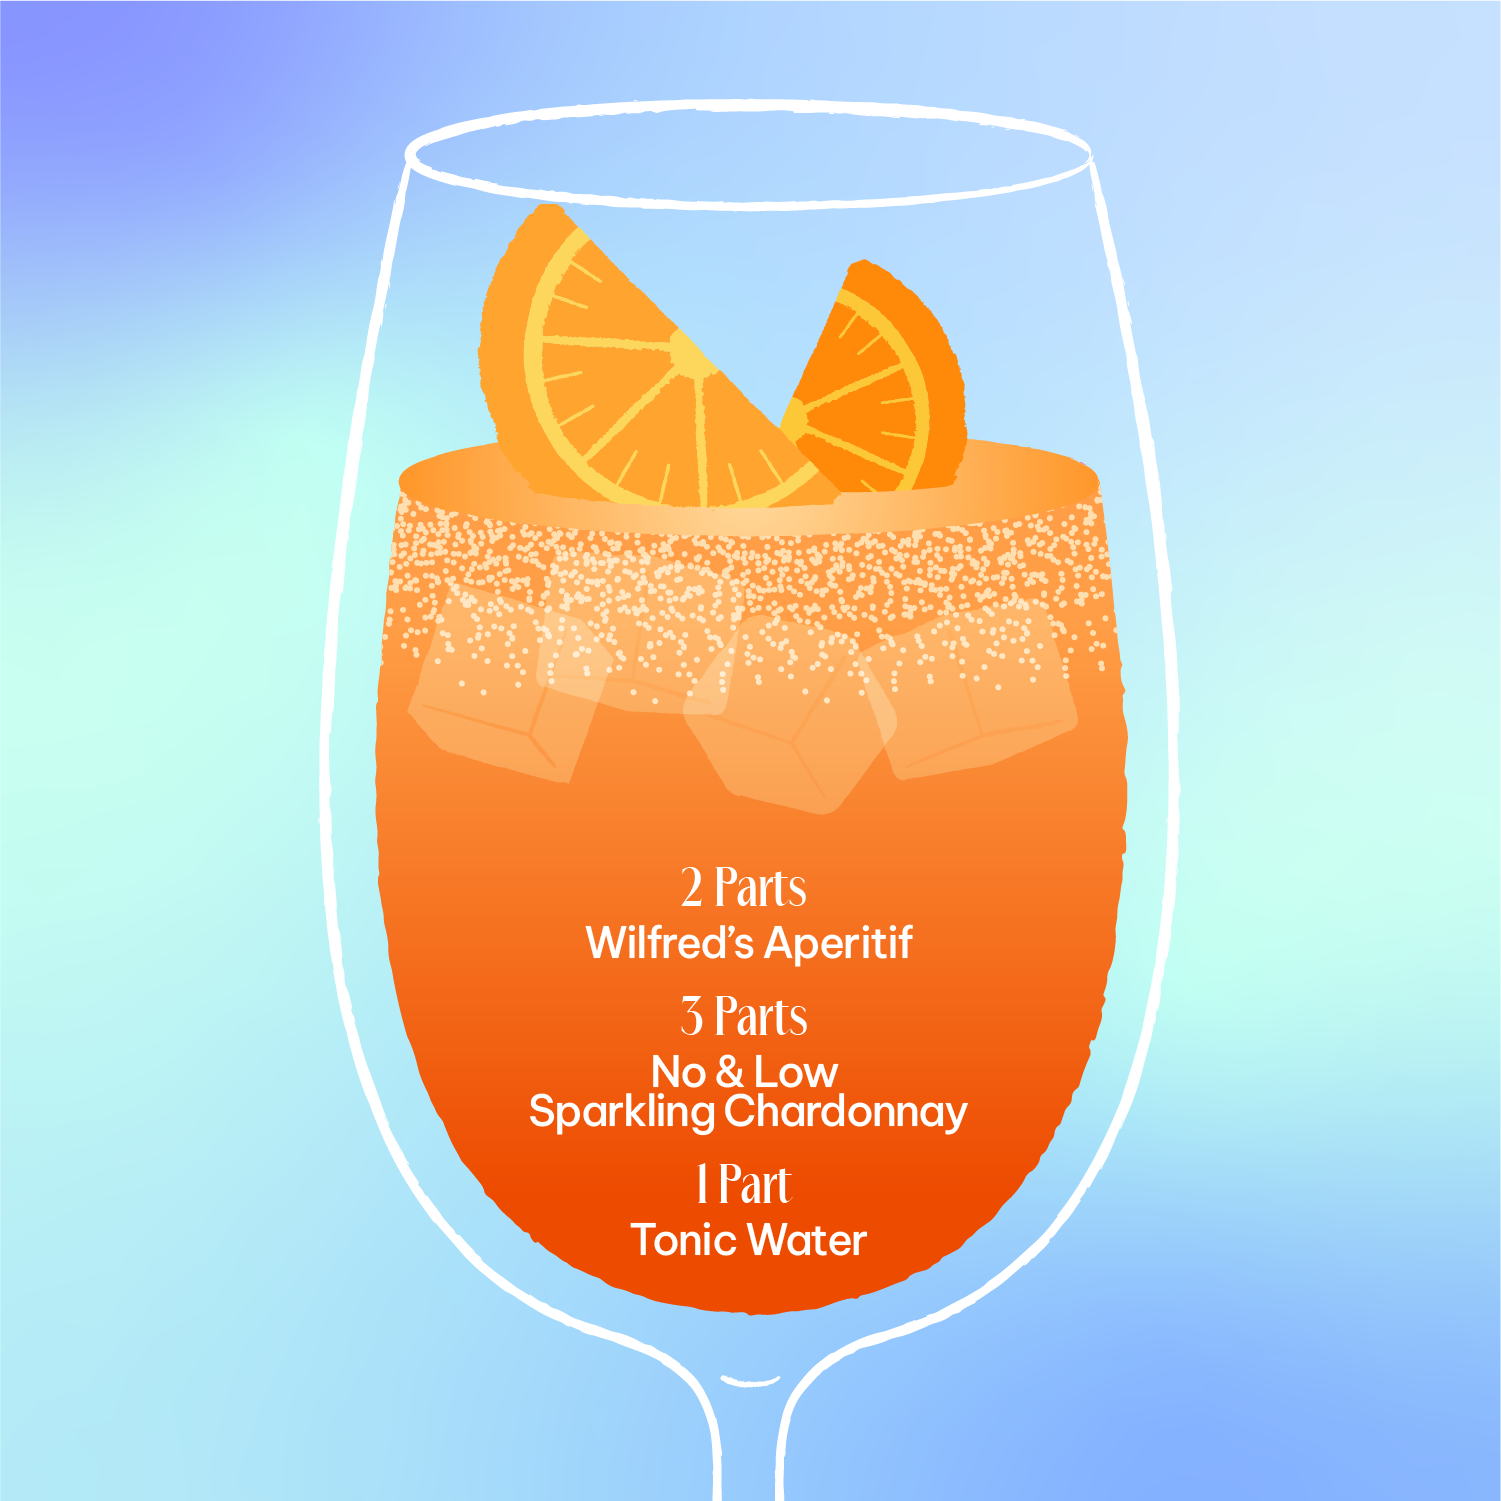 Non-alcoholic spritz cocktail